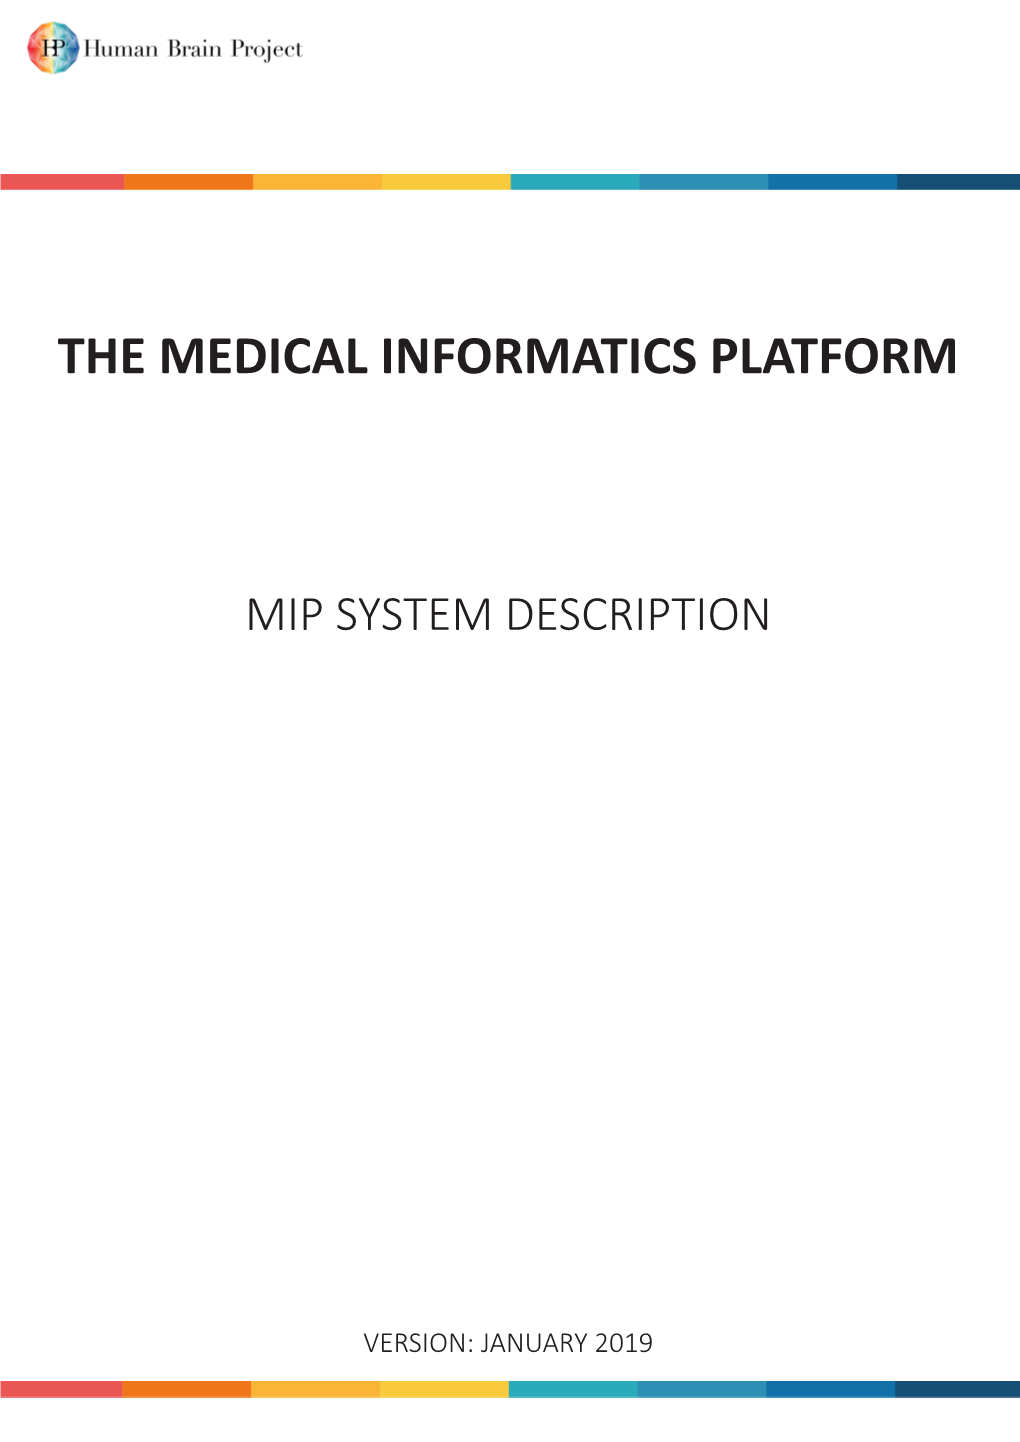 The Medical Informatics Platform